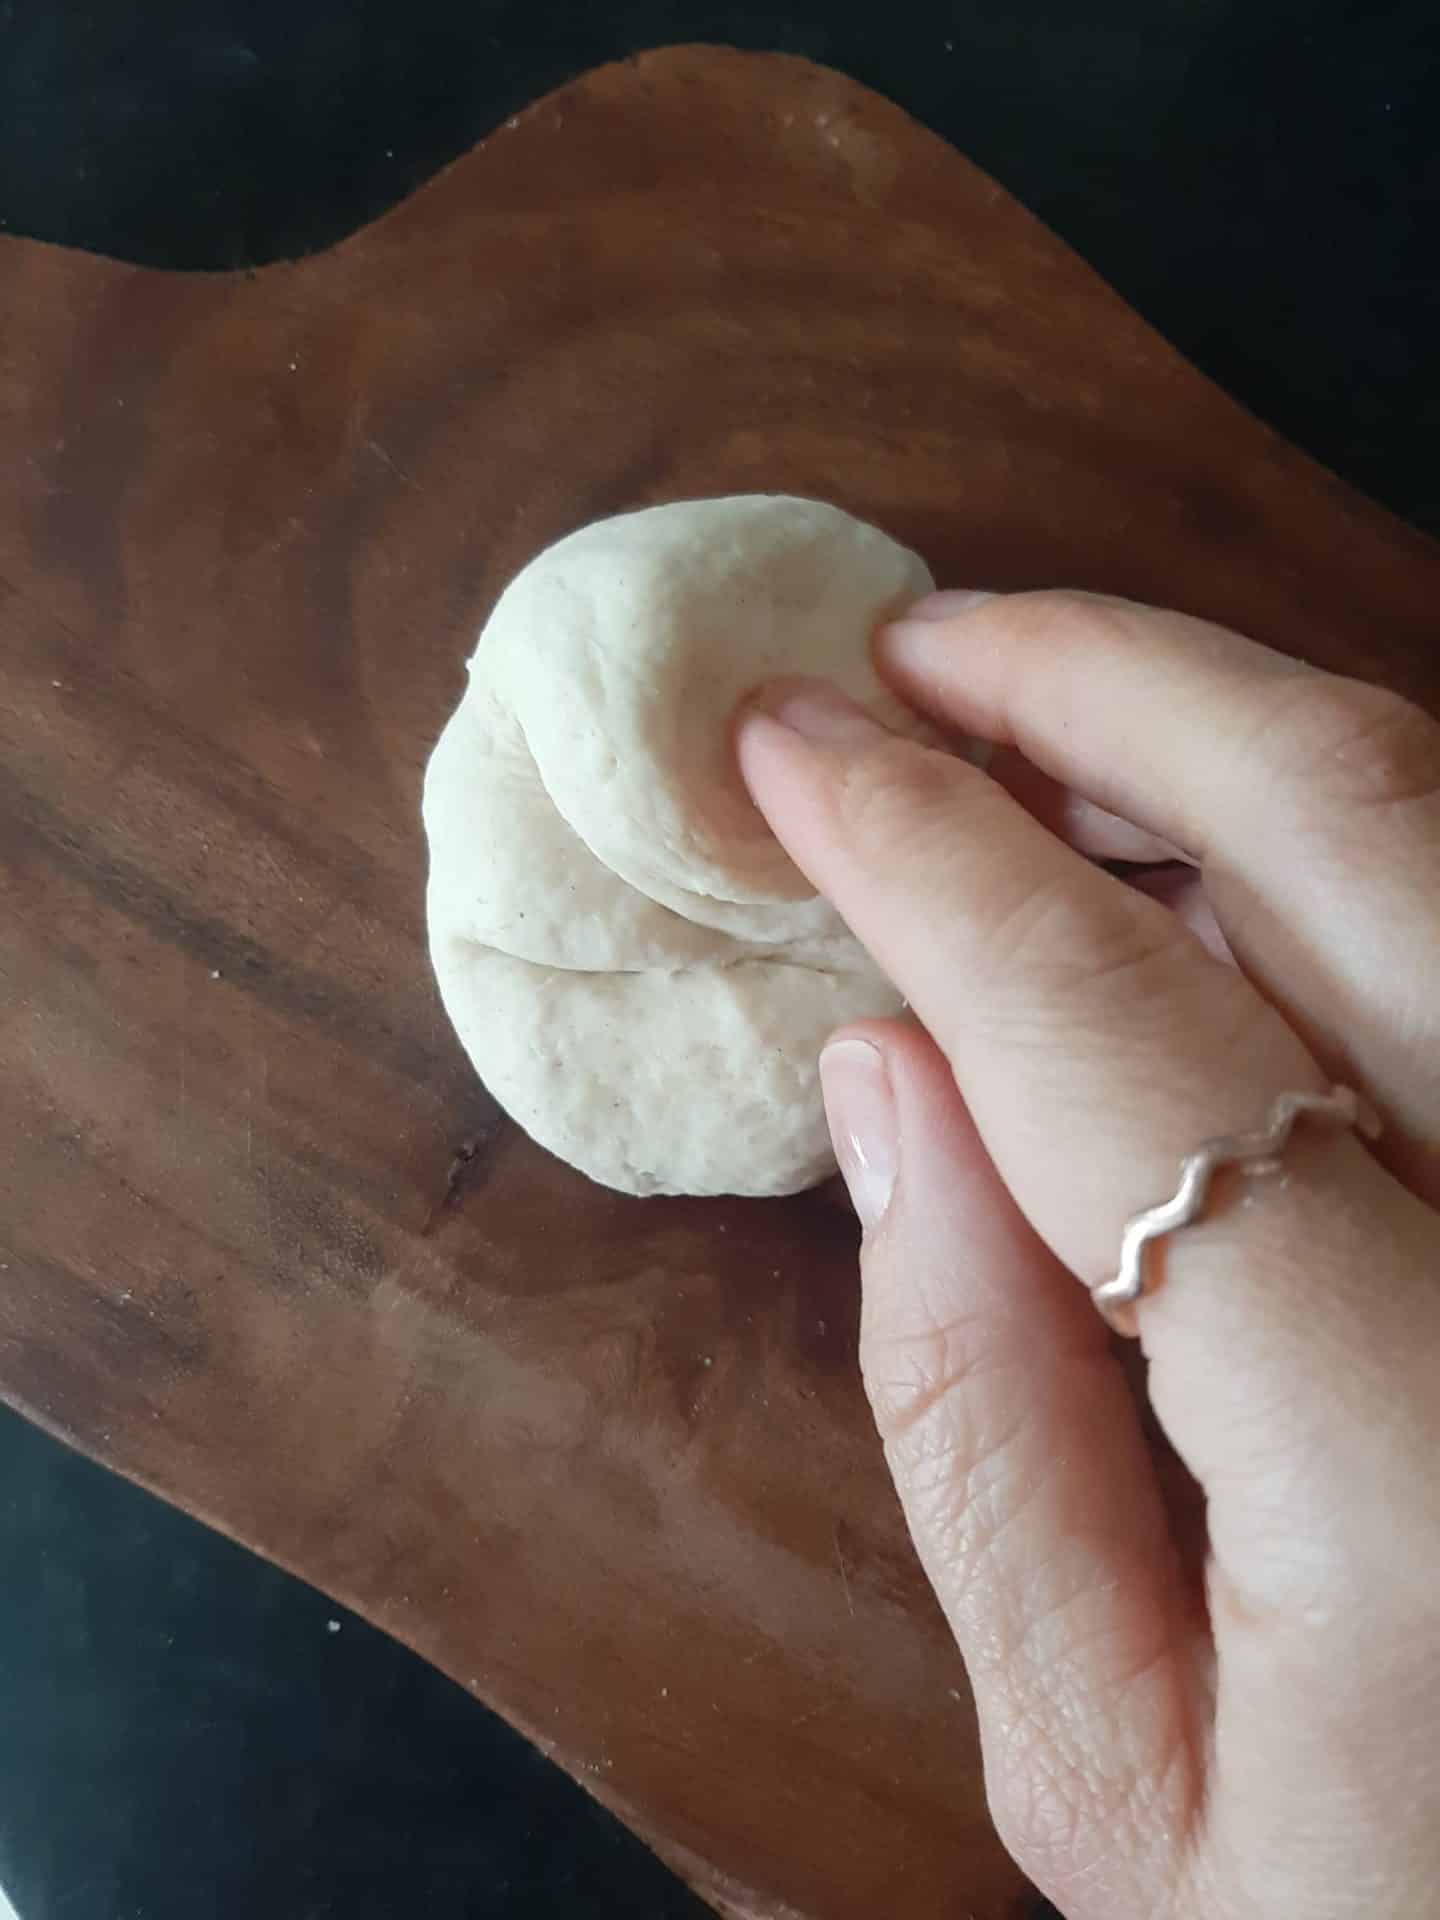 vegan cinnamon roll for one dough